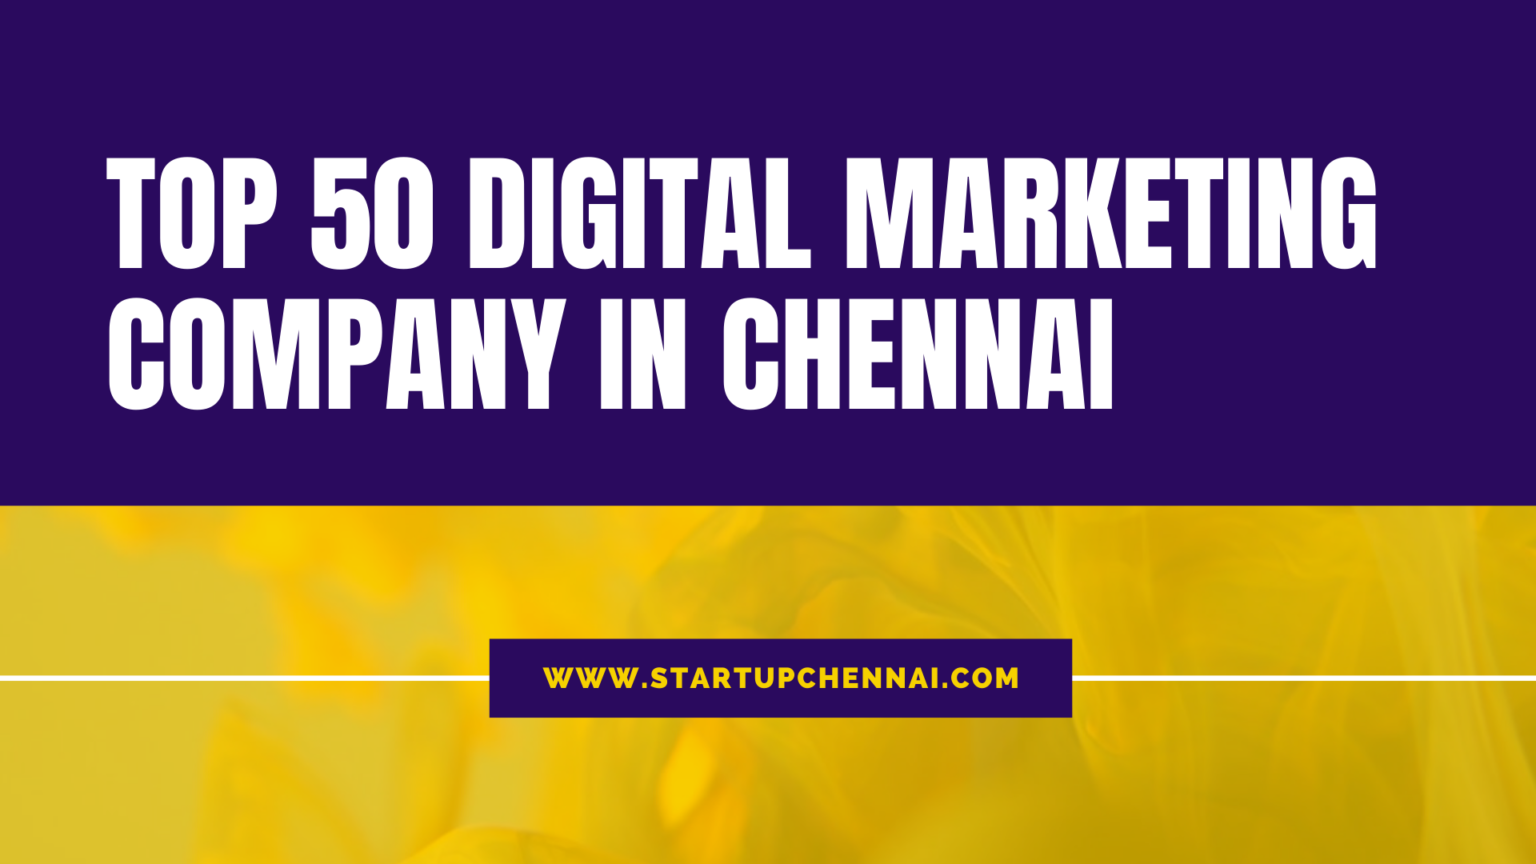 Top 50 Digital Marketing Companies/Agencies in Chennai, Tamil Nadu - India